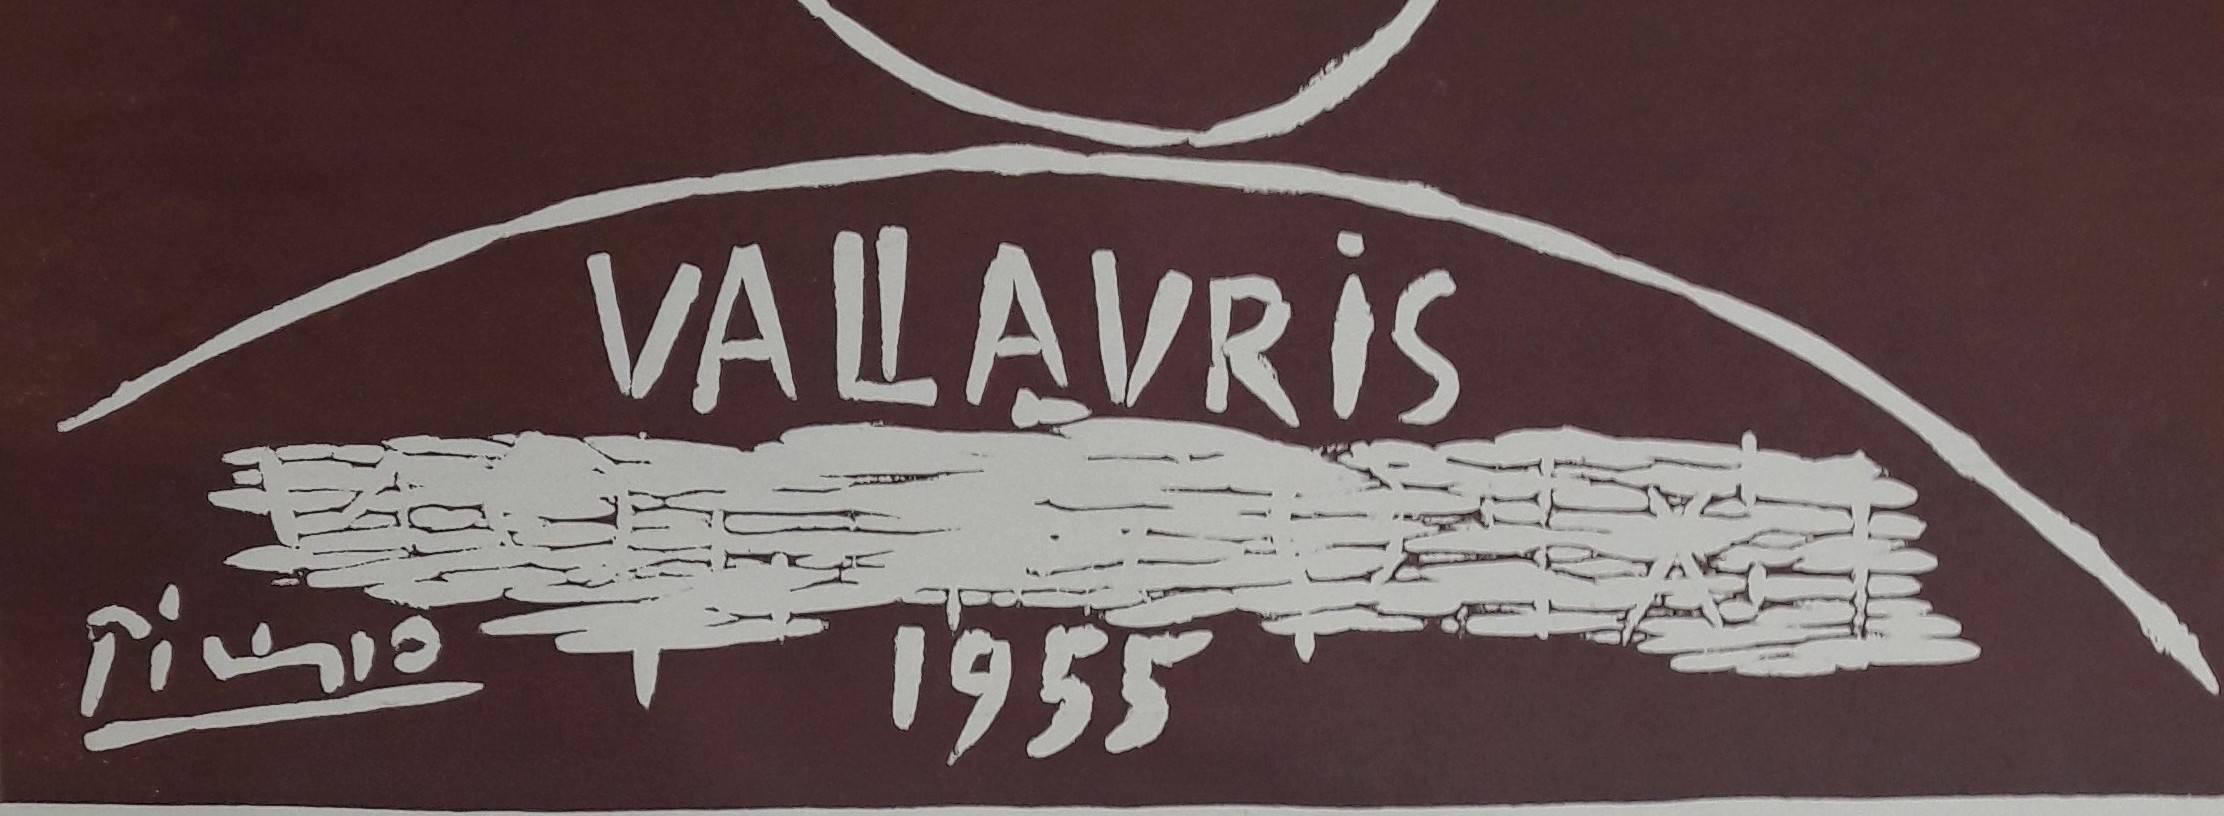 Exposition Vallauris 1955 - Original Linocut - Cubist Print by Pablo Picasso